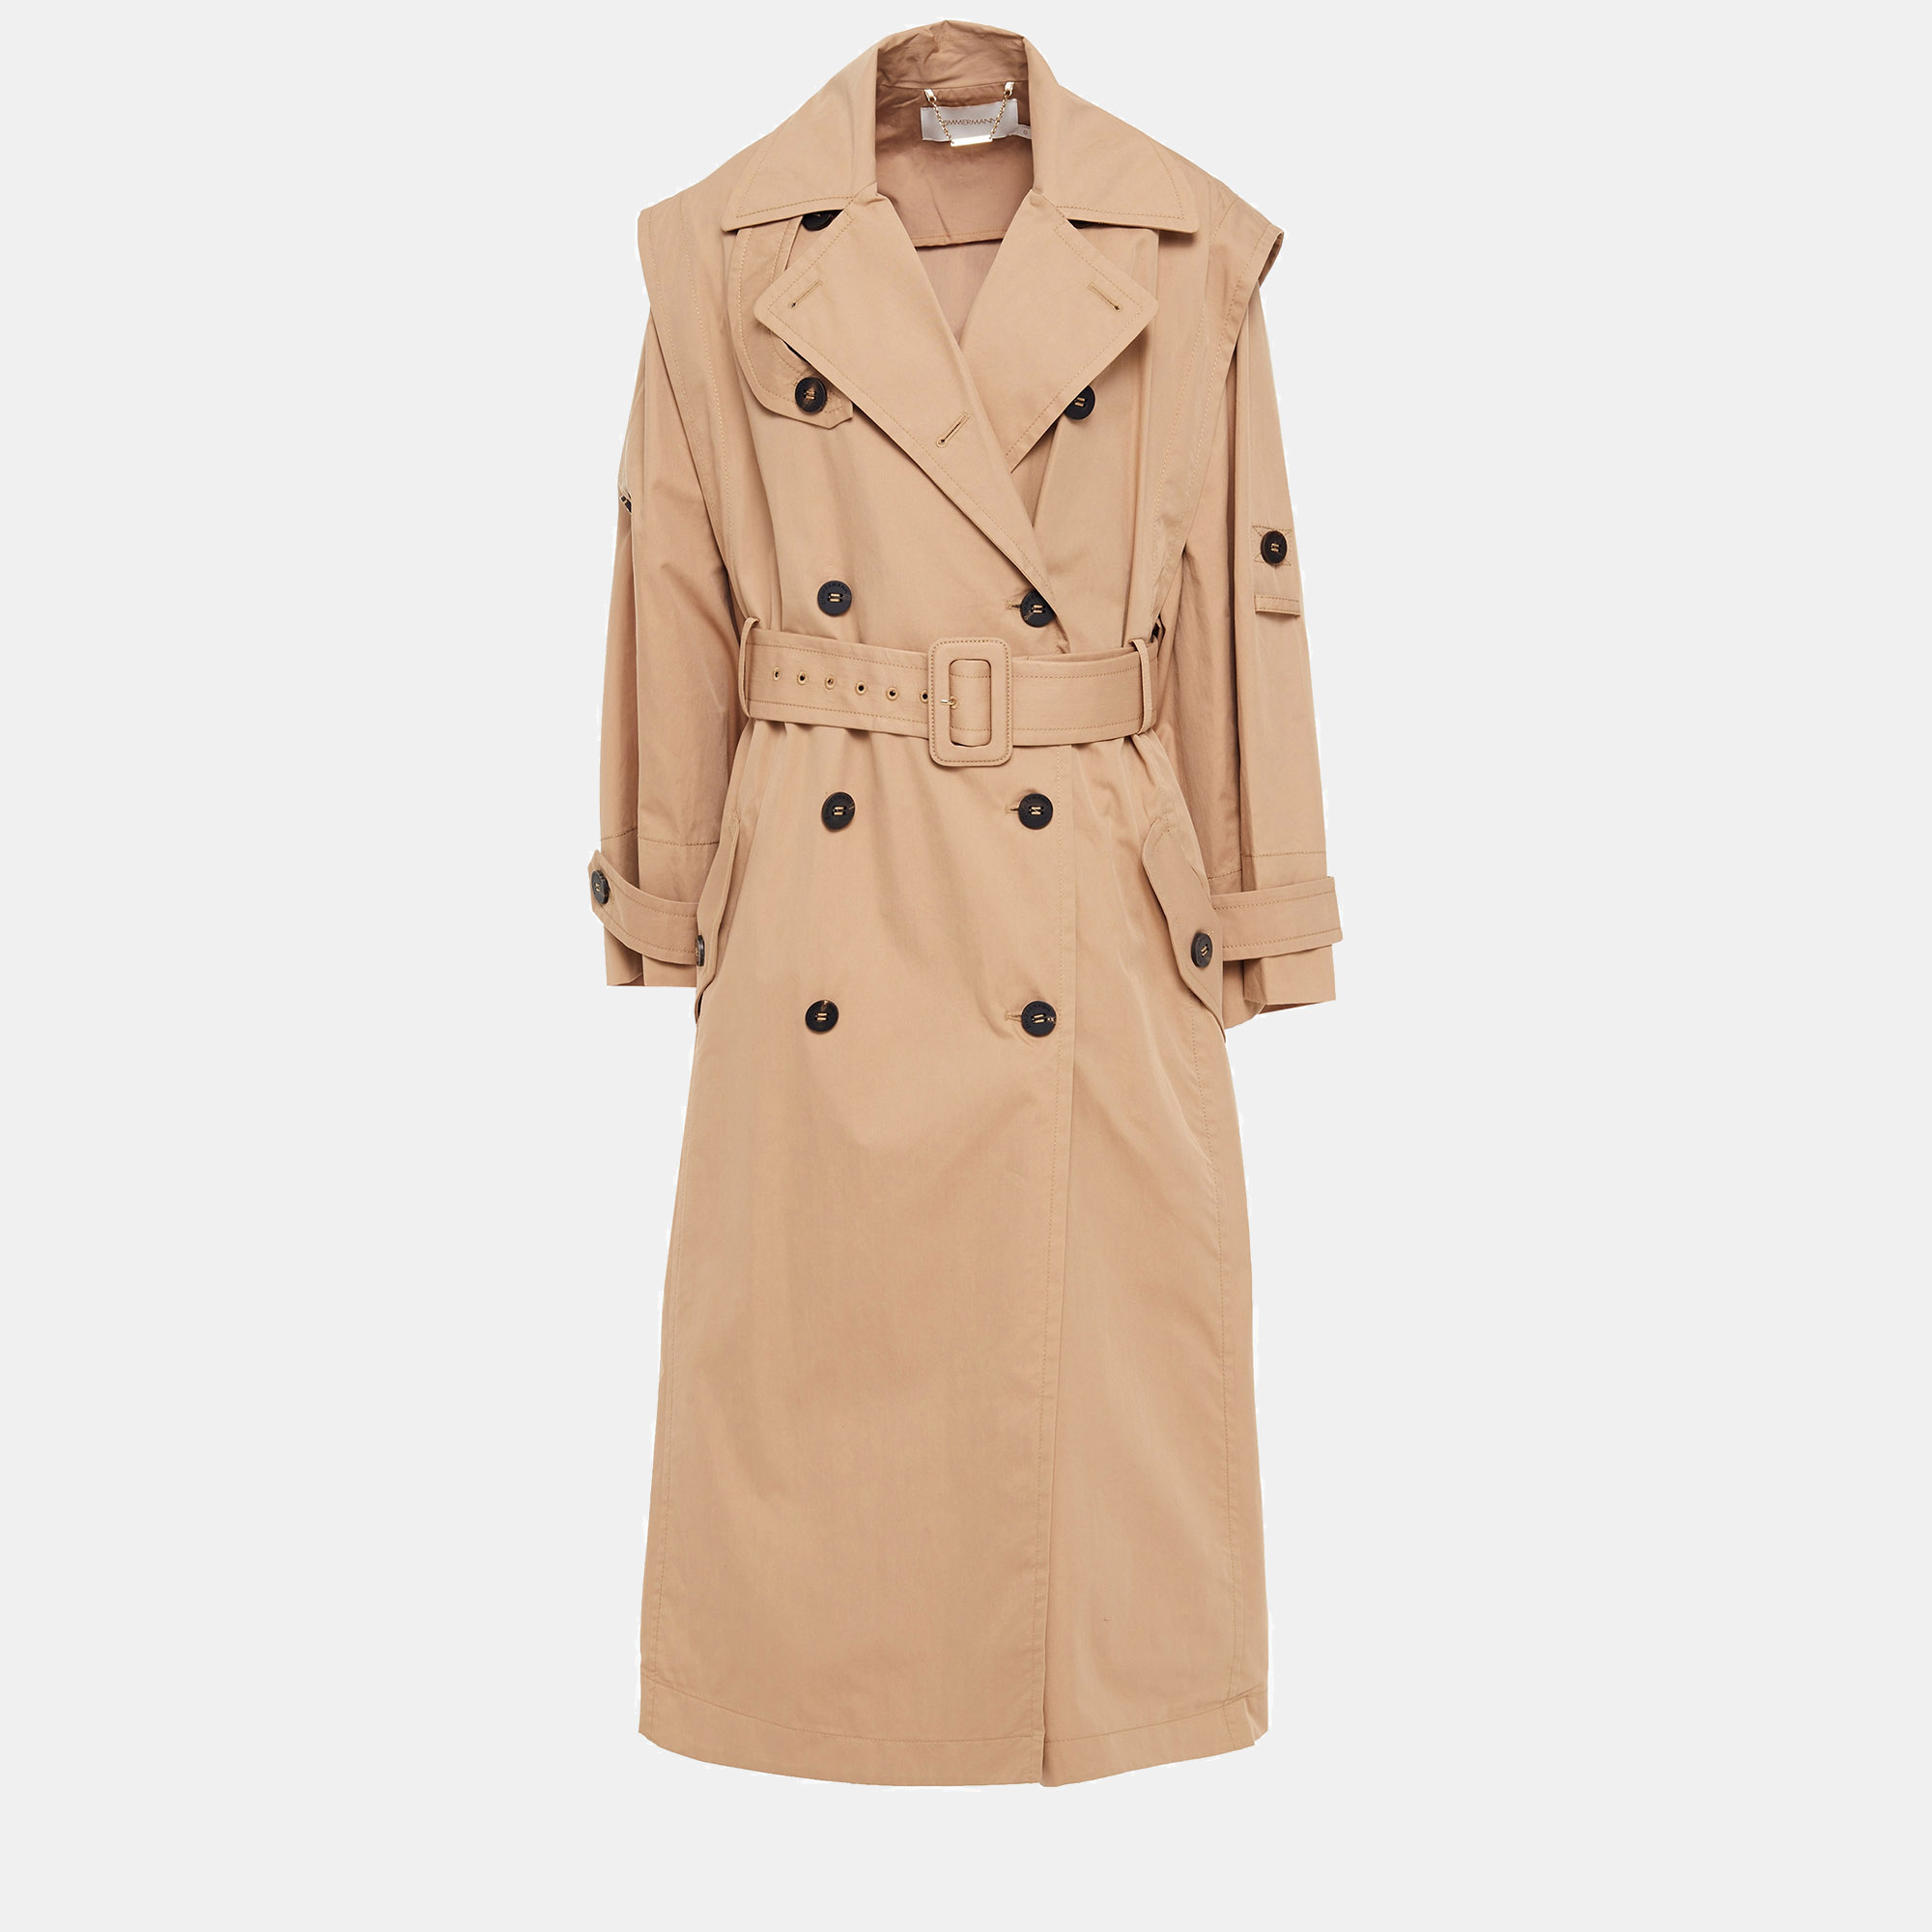 Zimmermann brown cotton trench coat s